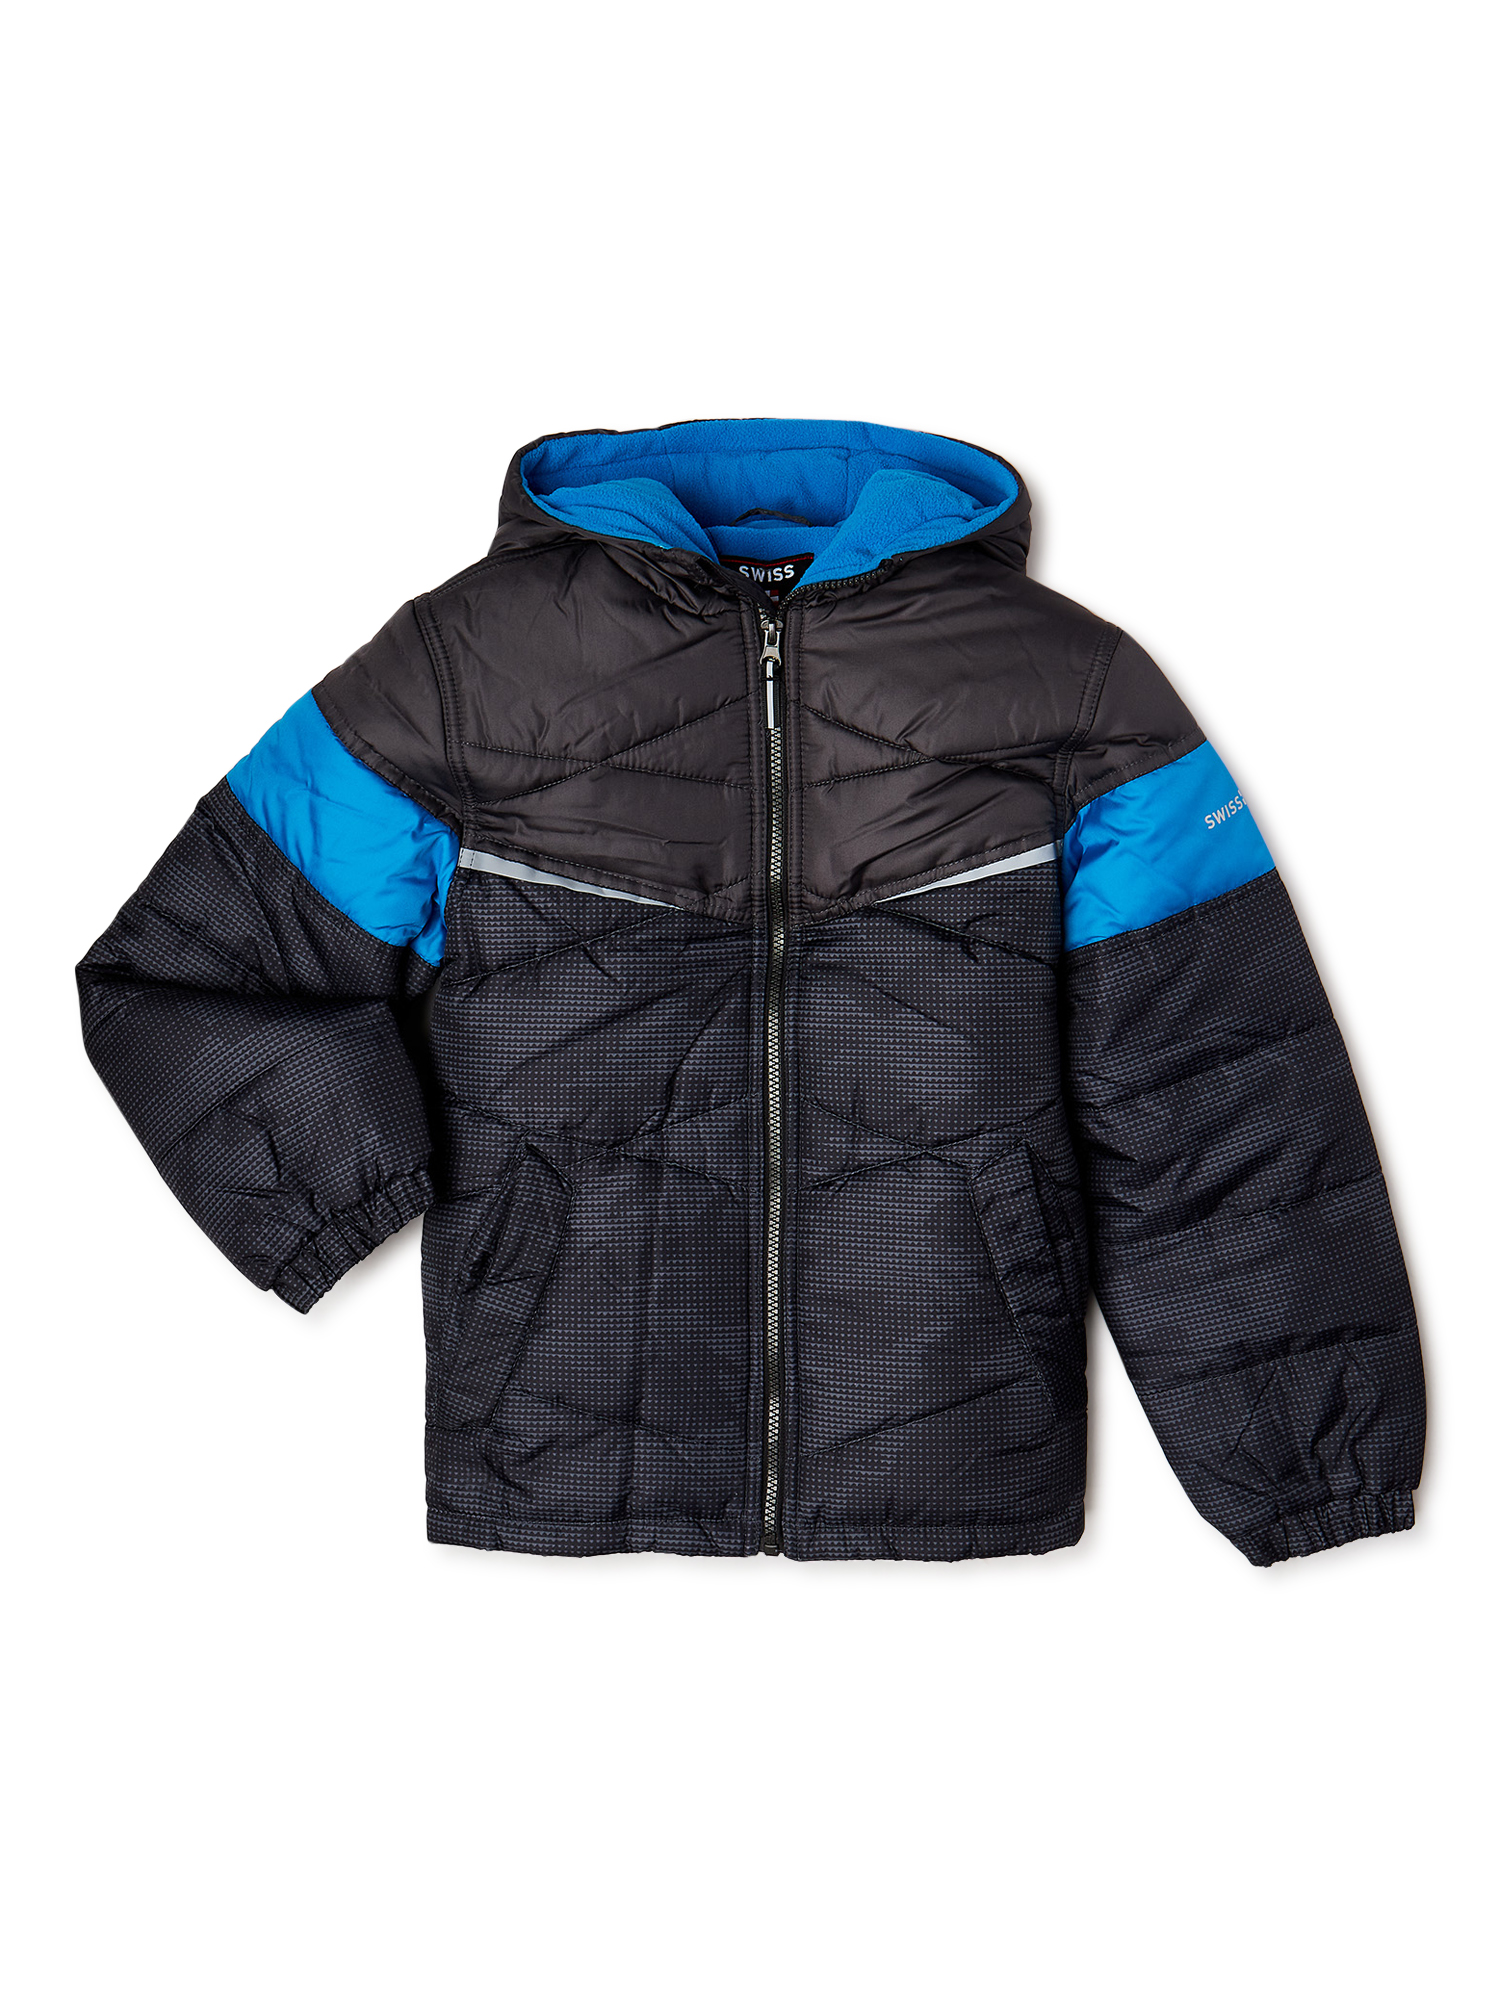 Swiss Alps Boys Camo Illusion Puffer Jacket, Sizes 4-16 - image 1 of 3